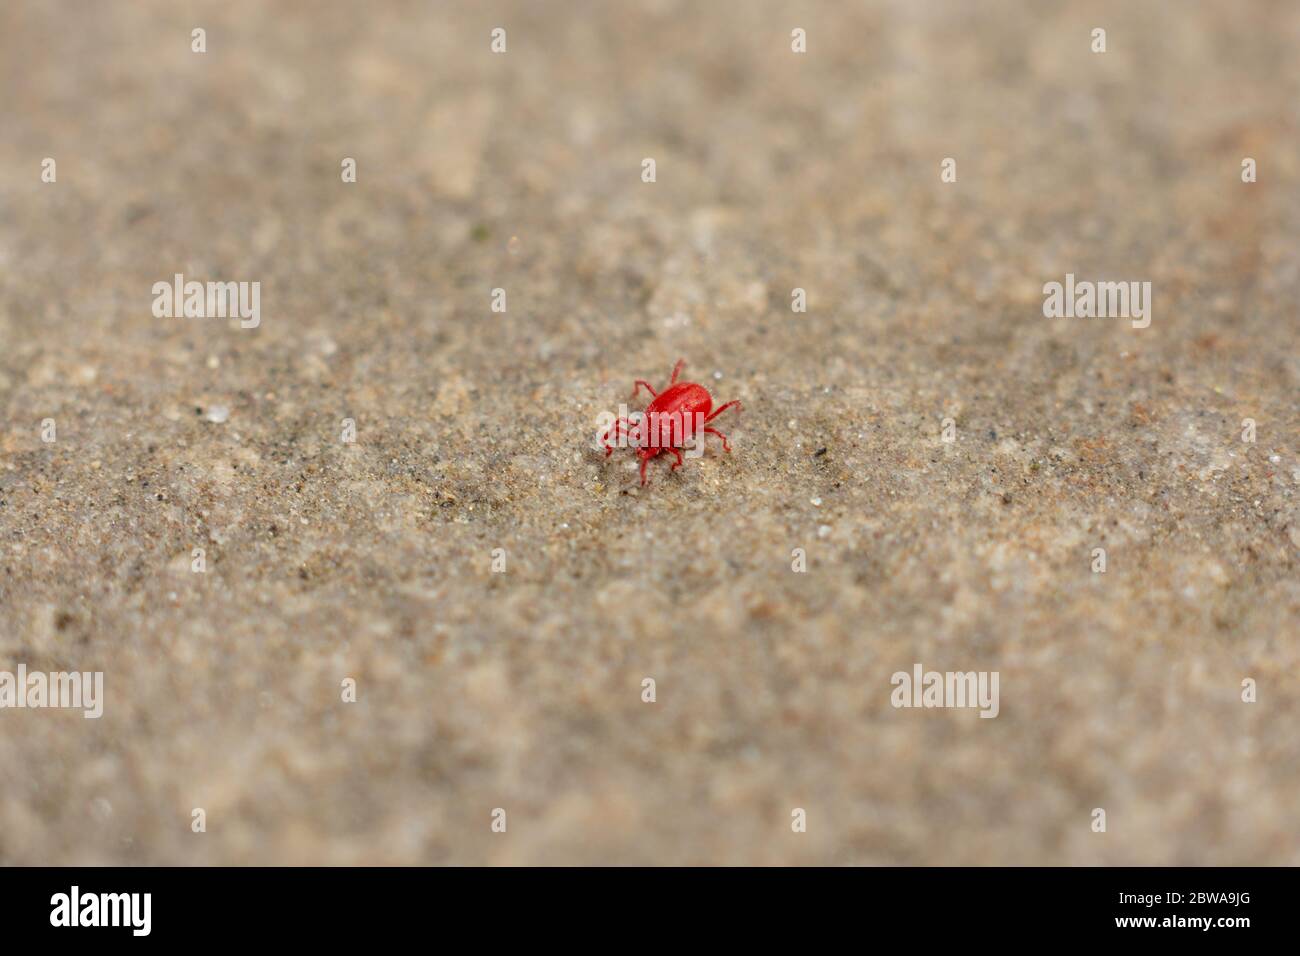 A single red mite crawling along concrete Stock Photo